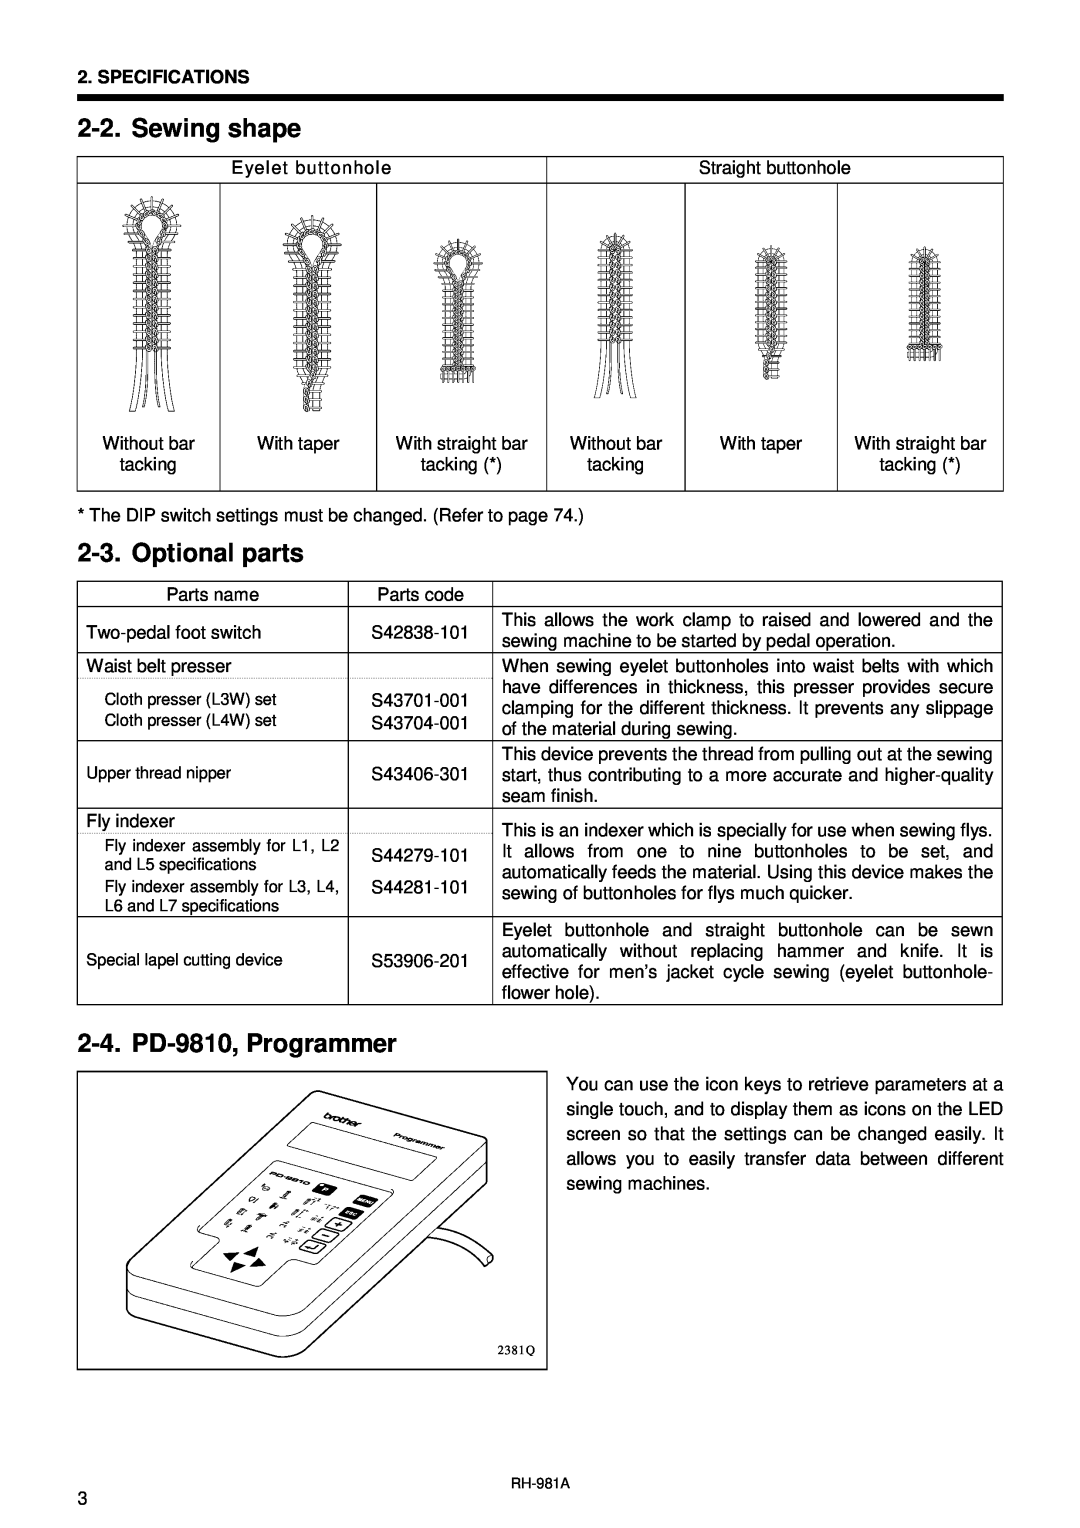 Brother rh-918a manual Sewing shape, Optional parts, PD-9810, Programmer, Cloth presser L3W set, Cloth presser L4W set 